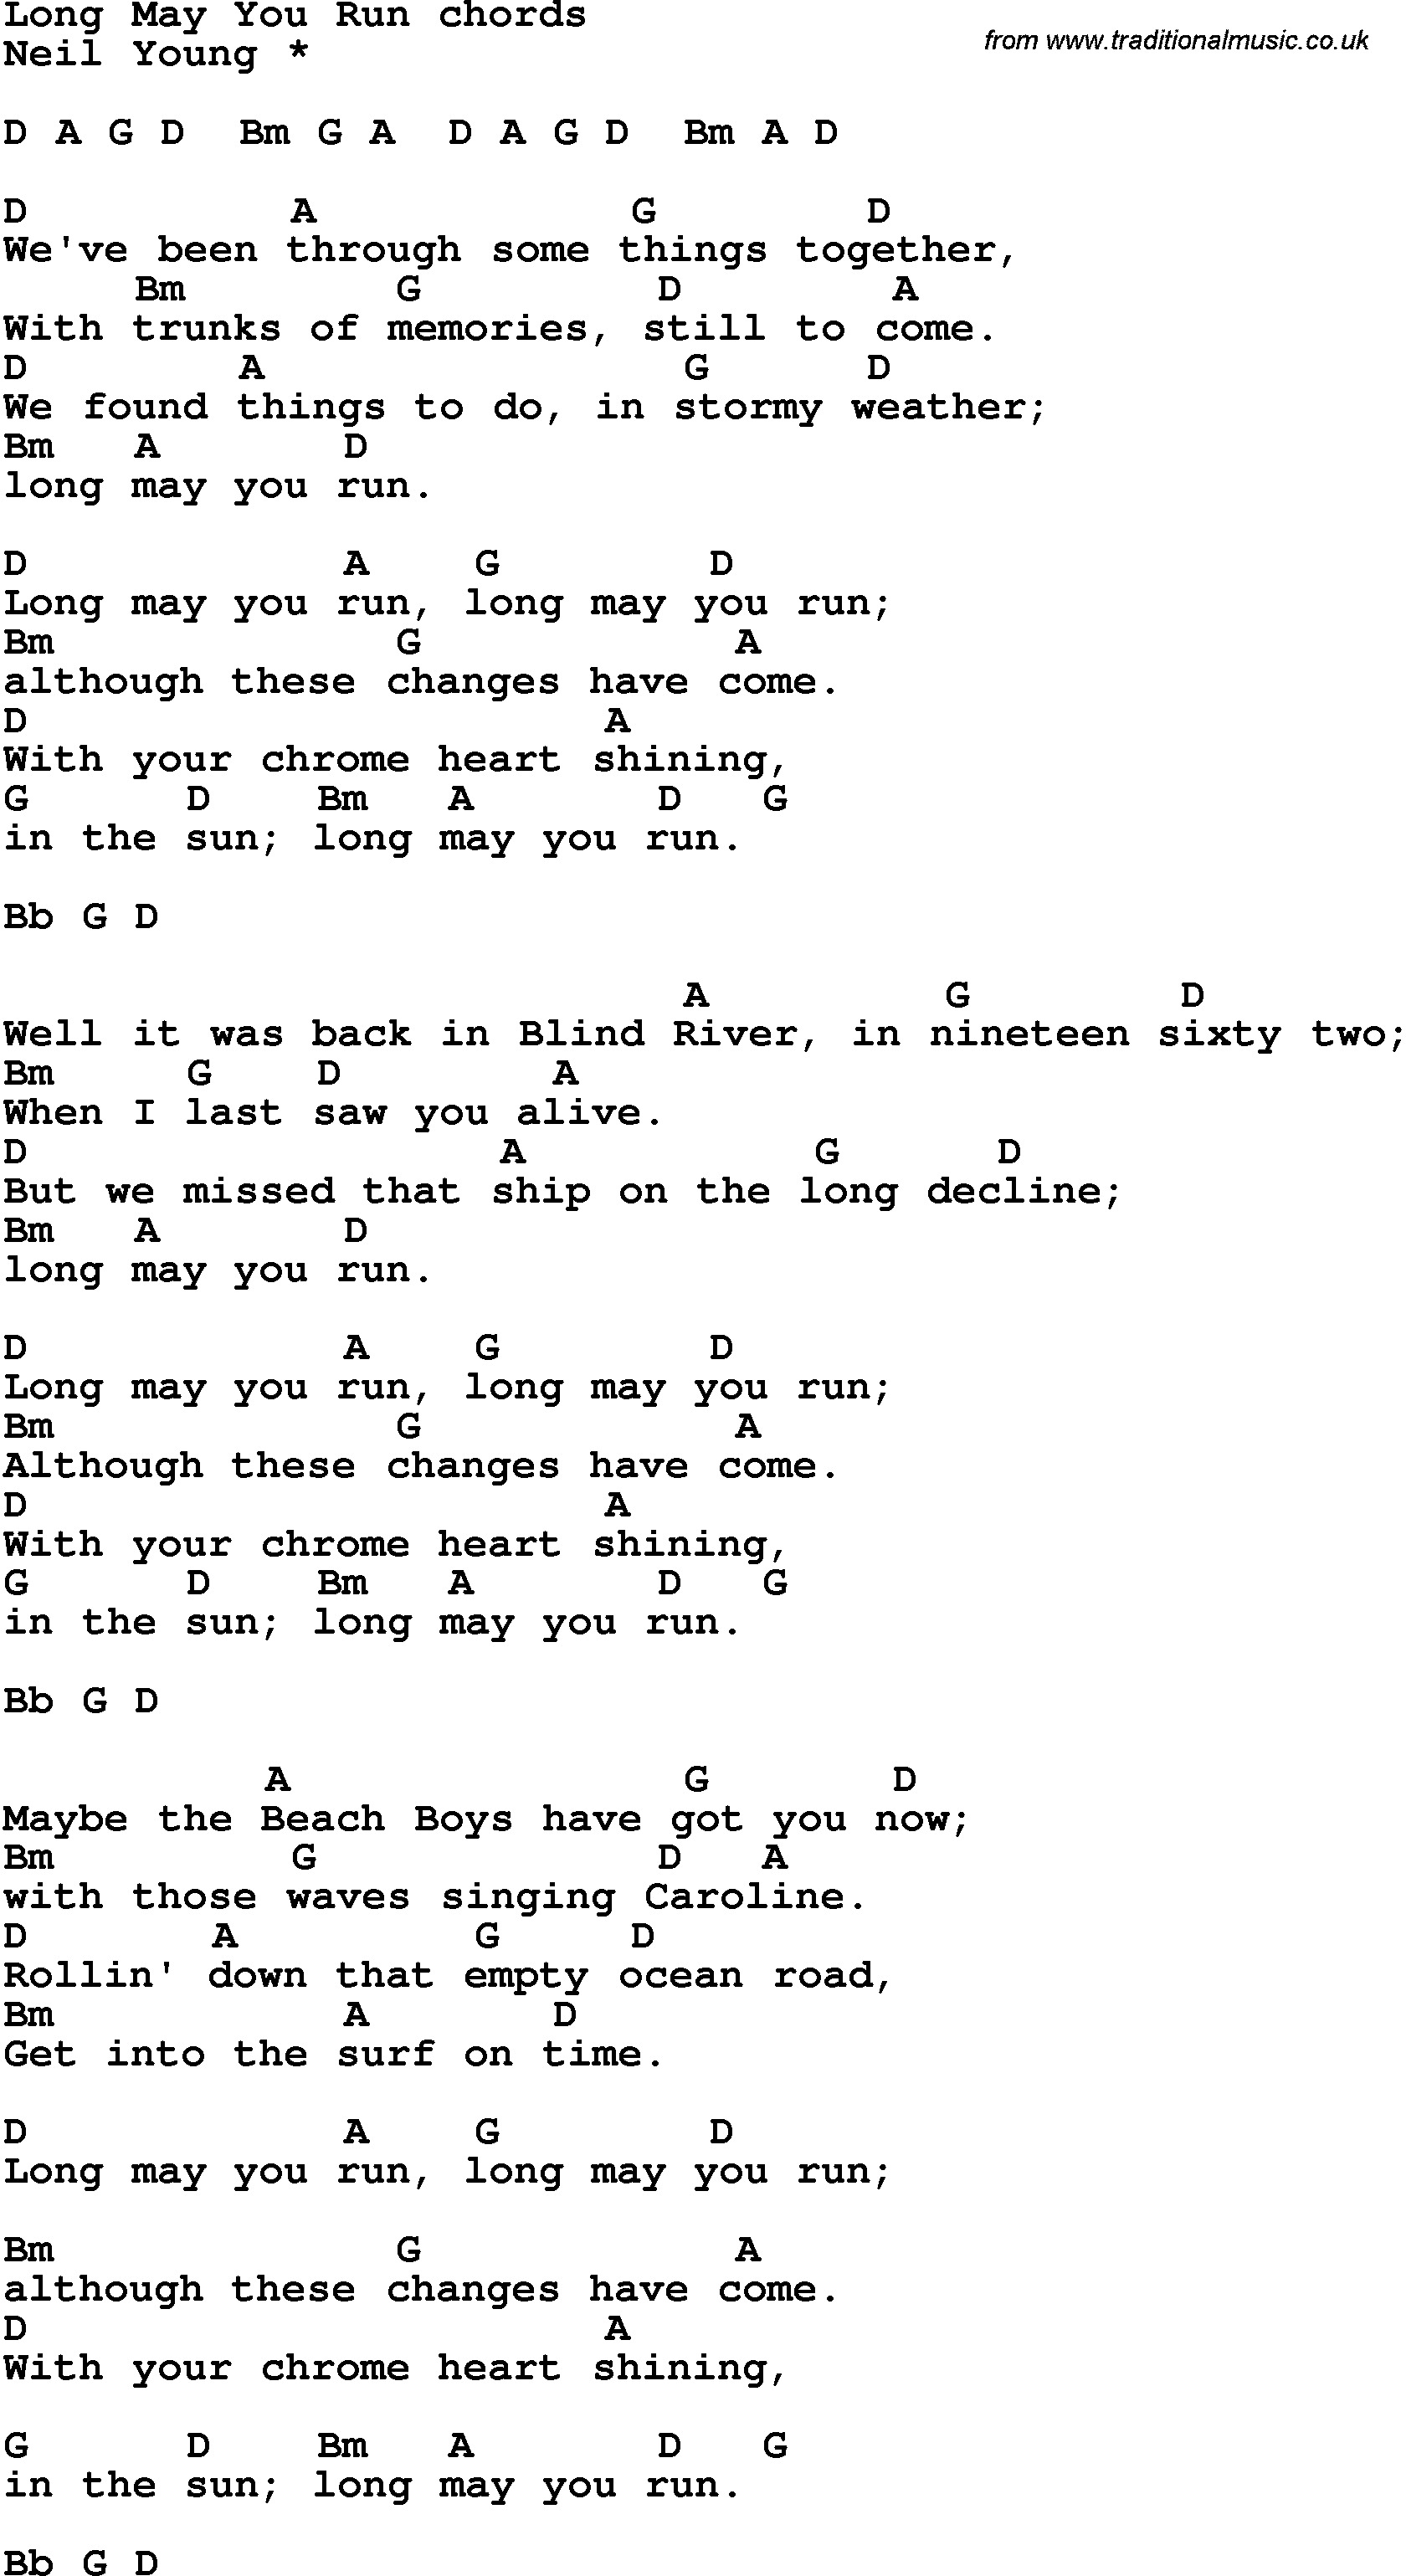 Song Lyrics with guitar chords for Long May You Run